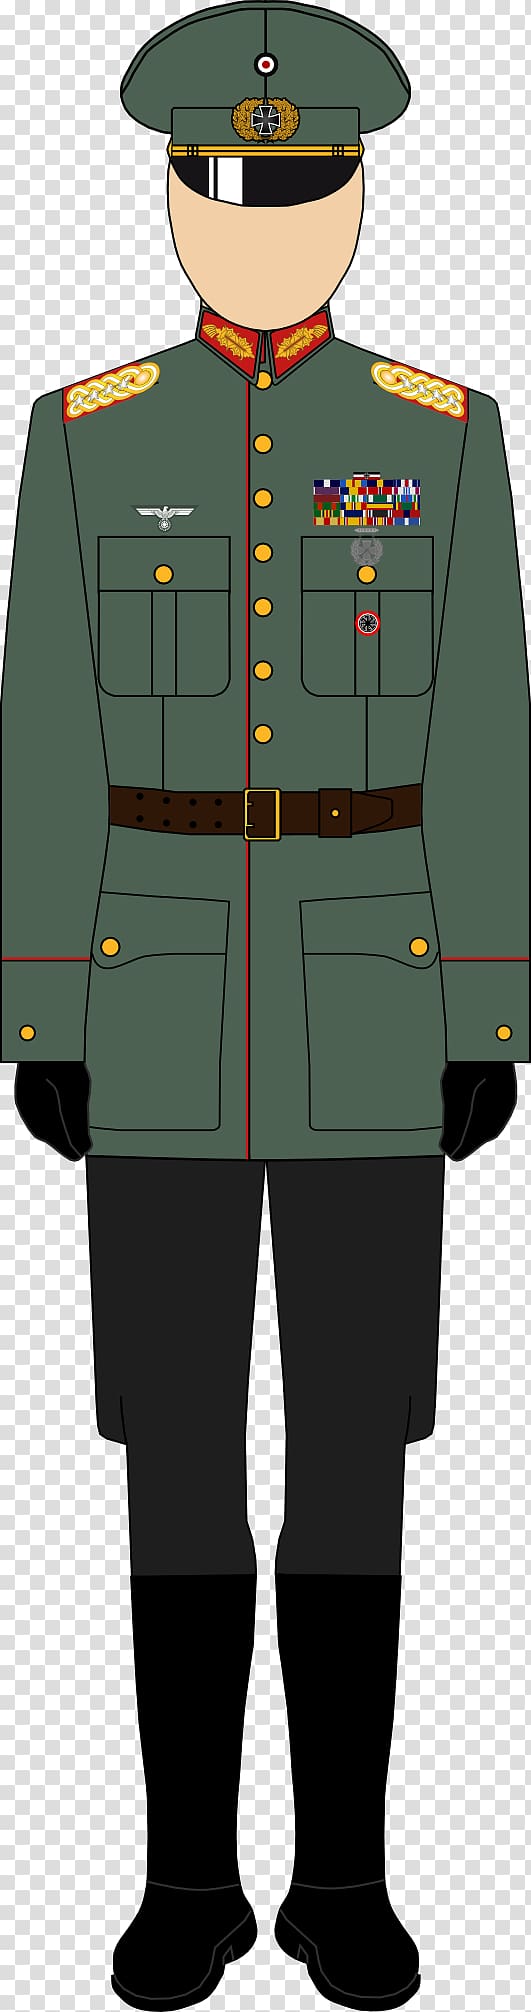 Military uniform Army officer Dress uniform General, uniform transparent background PNG clipart